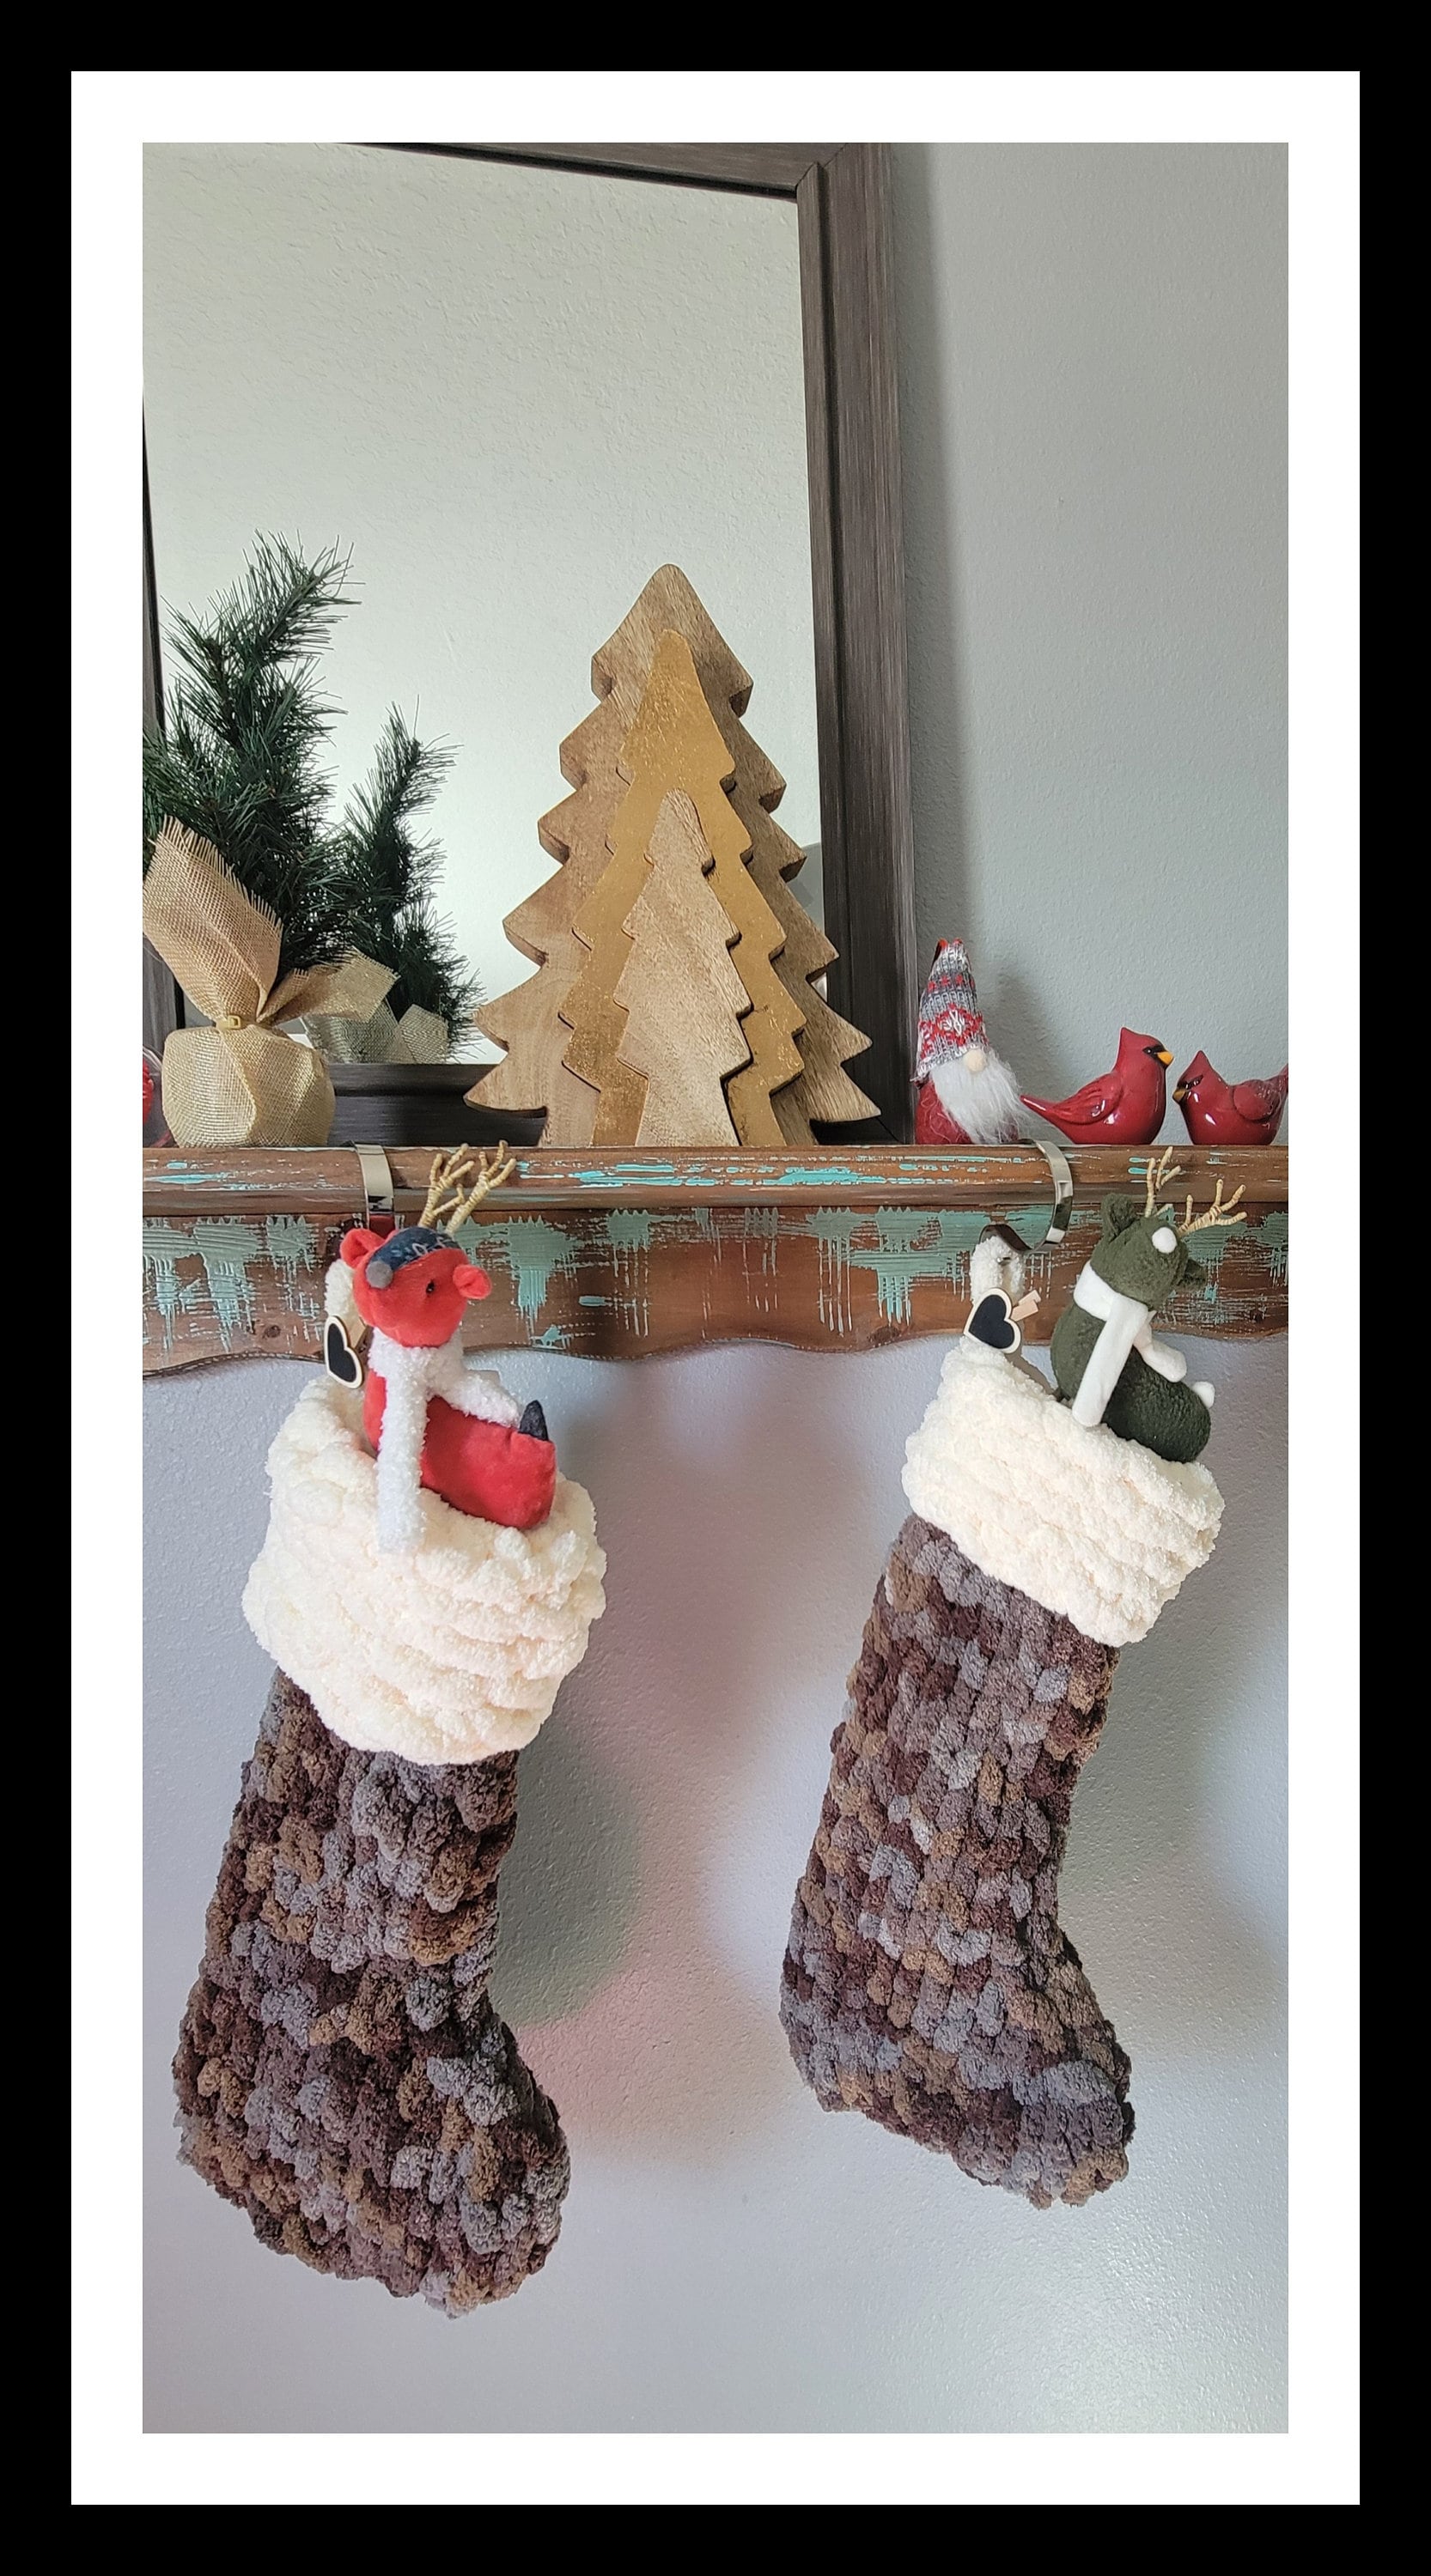 Chunky yarn finger knitting Christmas stockings 10/28 3pm